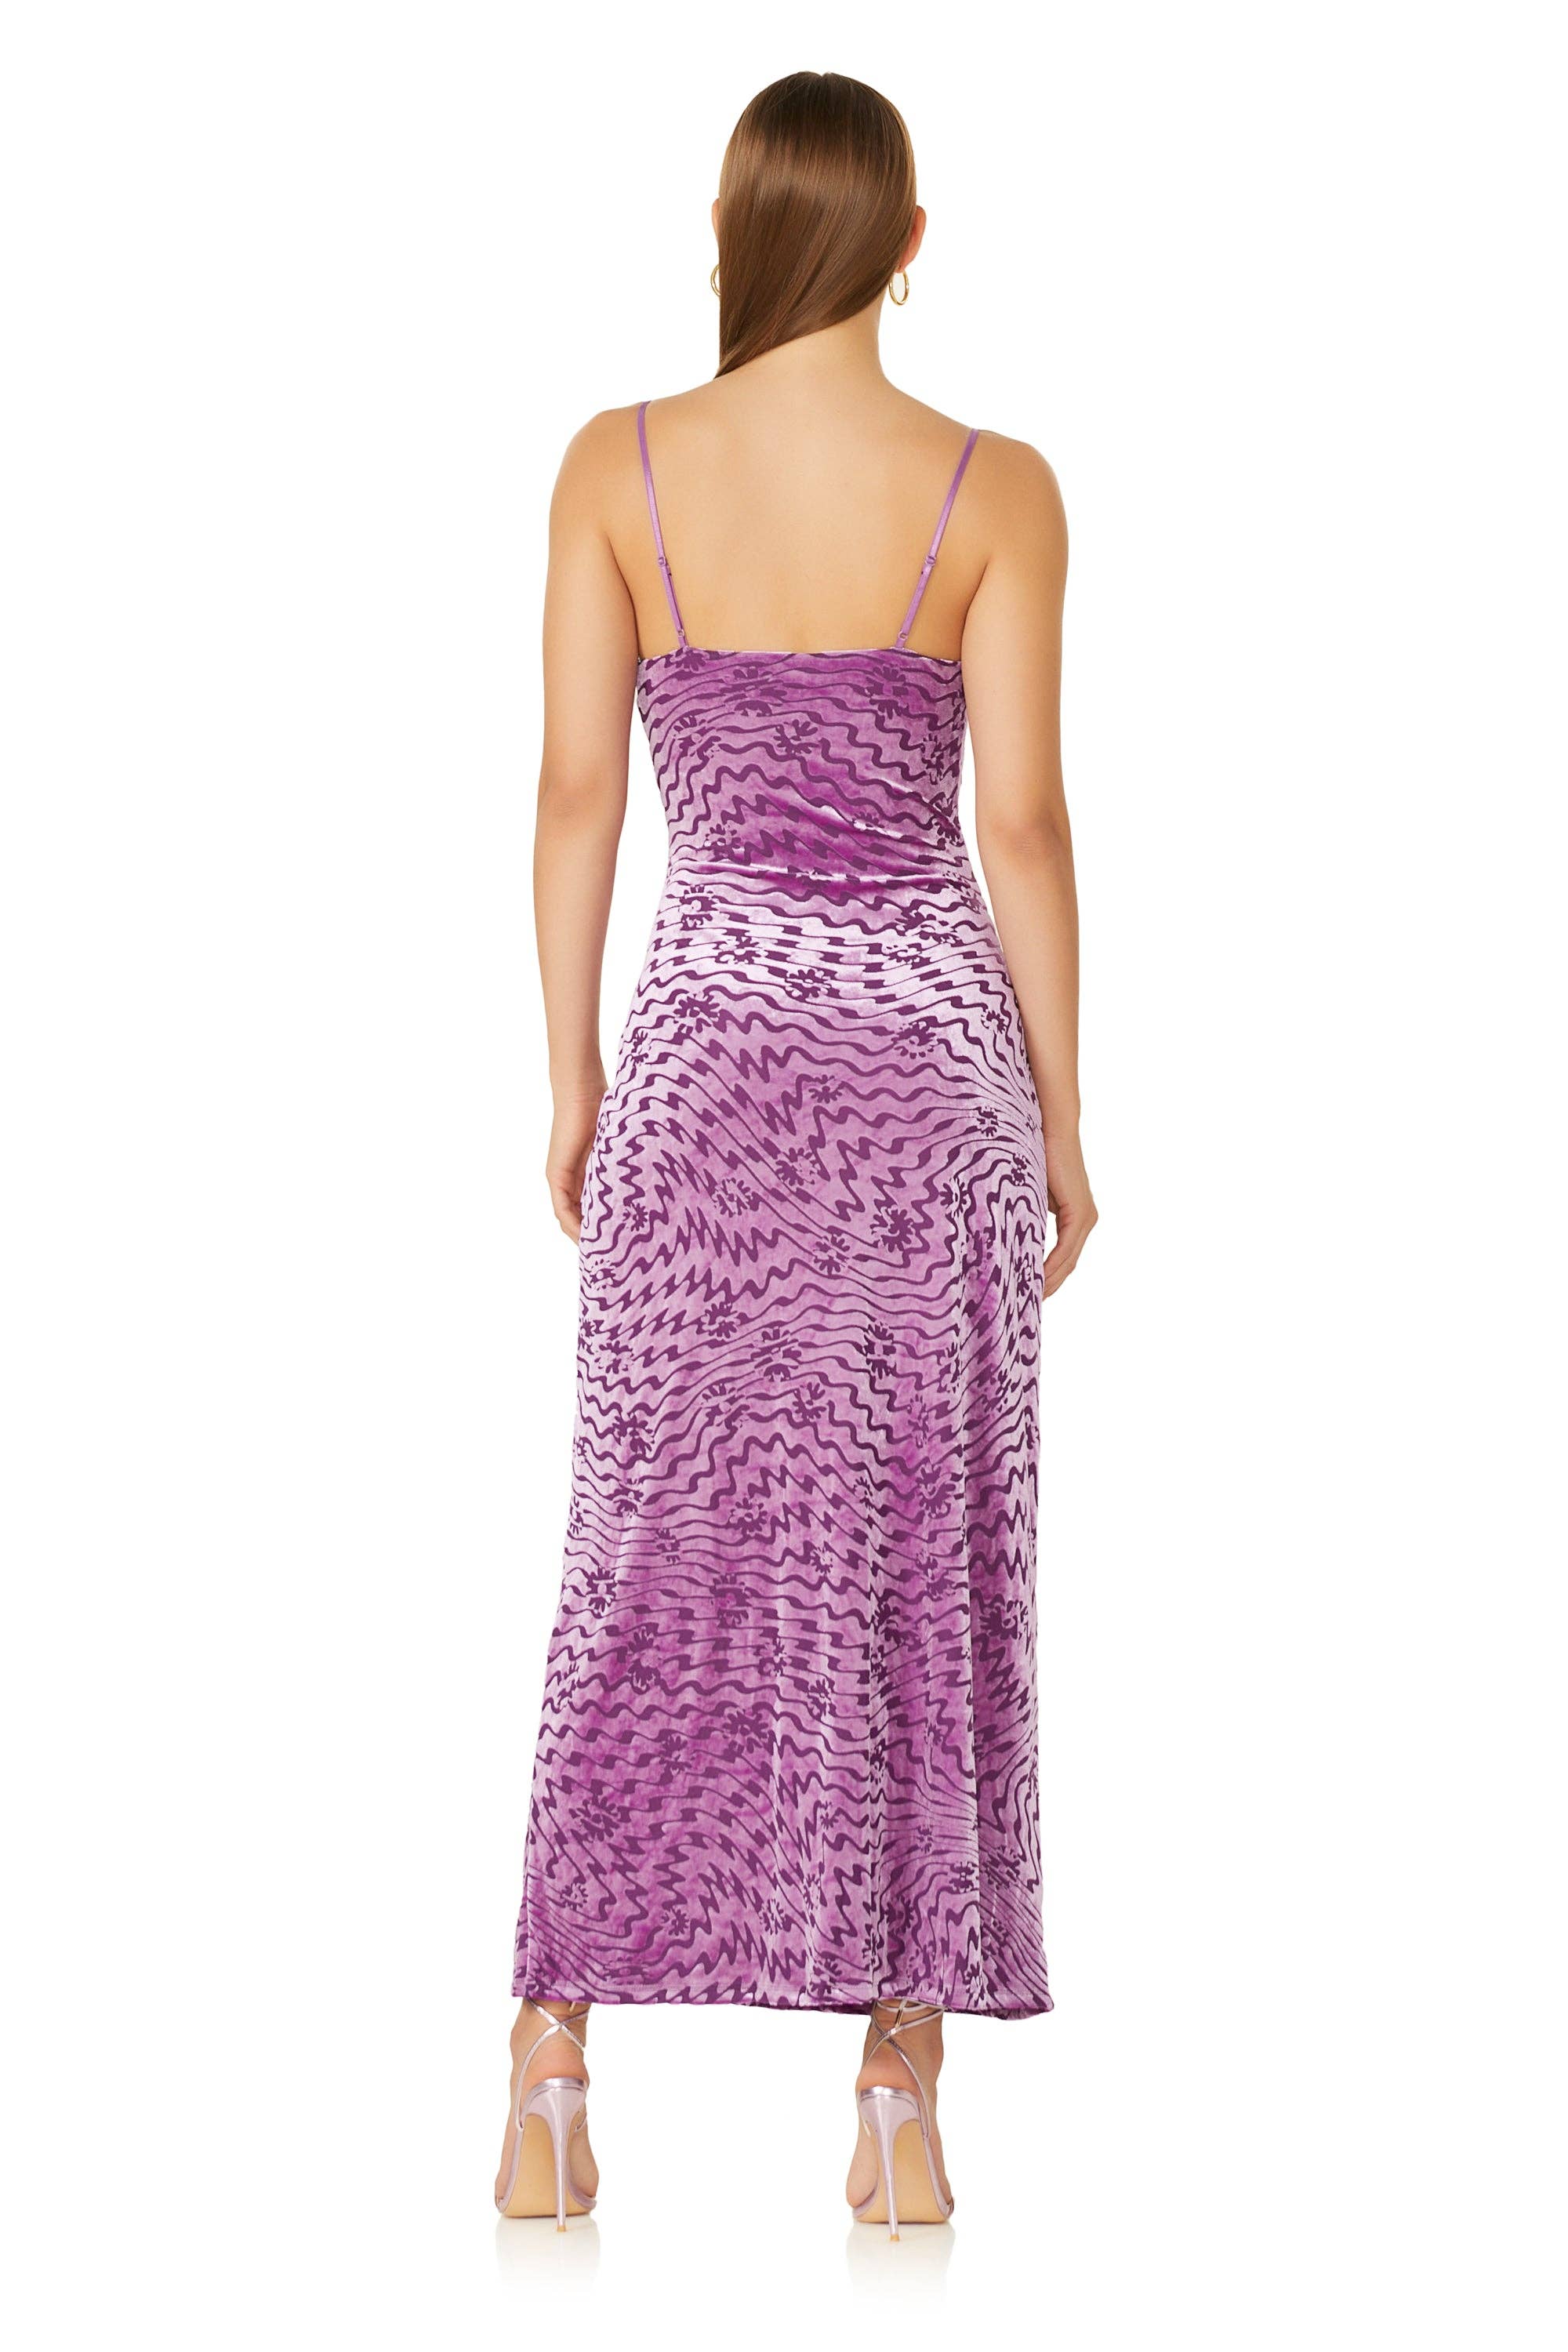 AFRM - Cullen Maxi Dress - Violet Wave